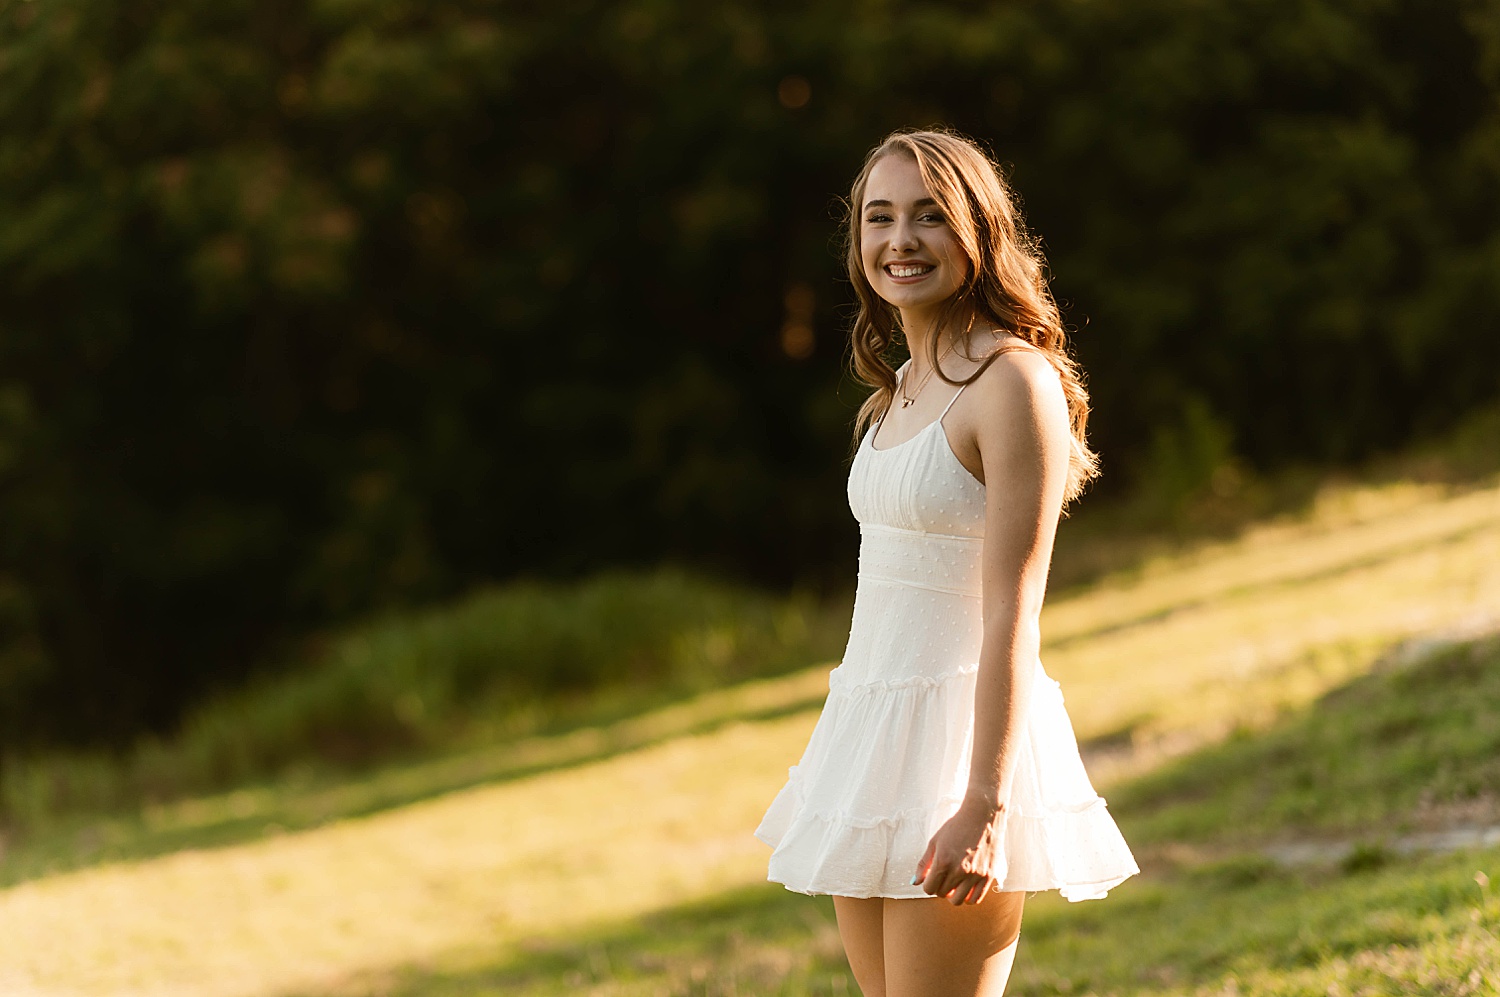 Brunette in white dress at a park for for Golden Hour Session